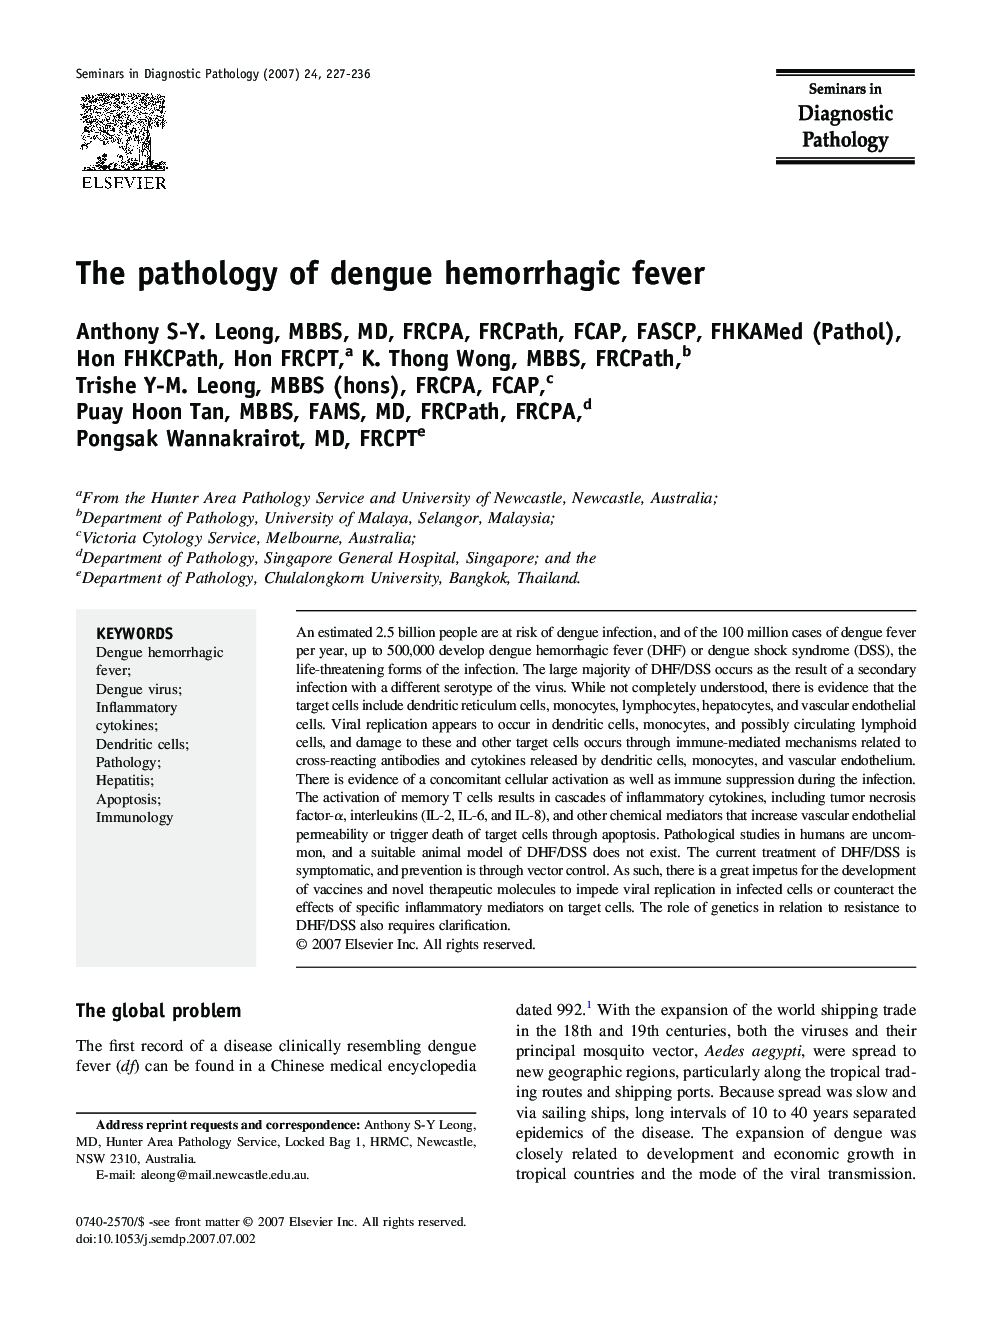 The pathology of dengue hemorrhagic fever